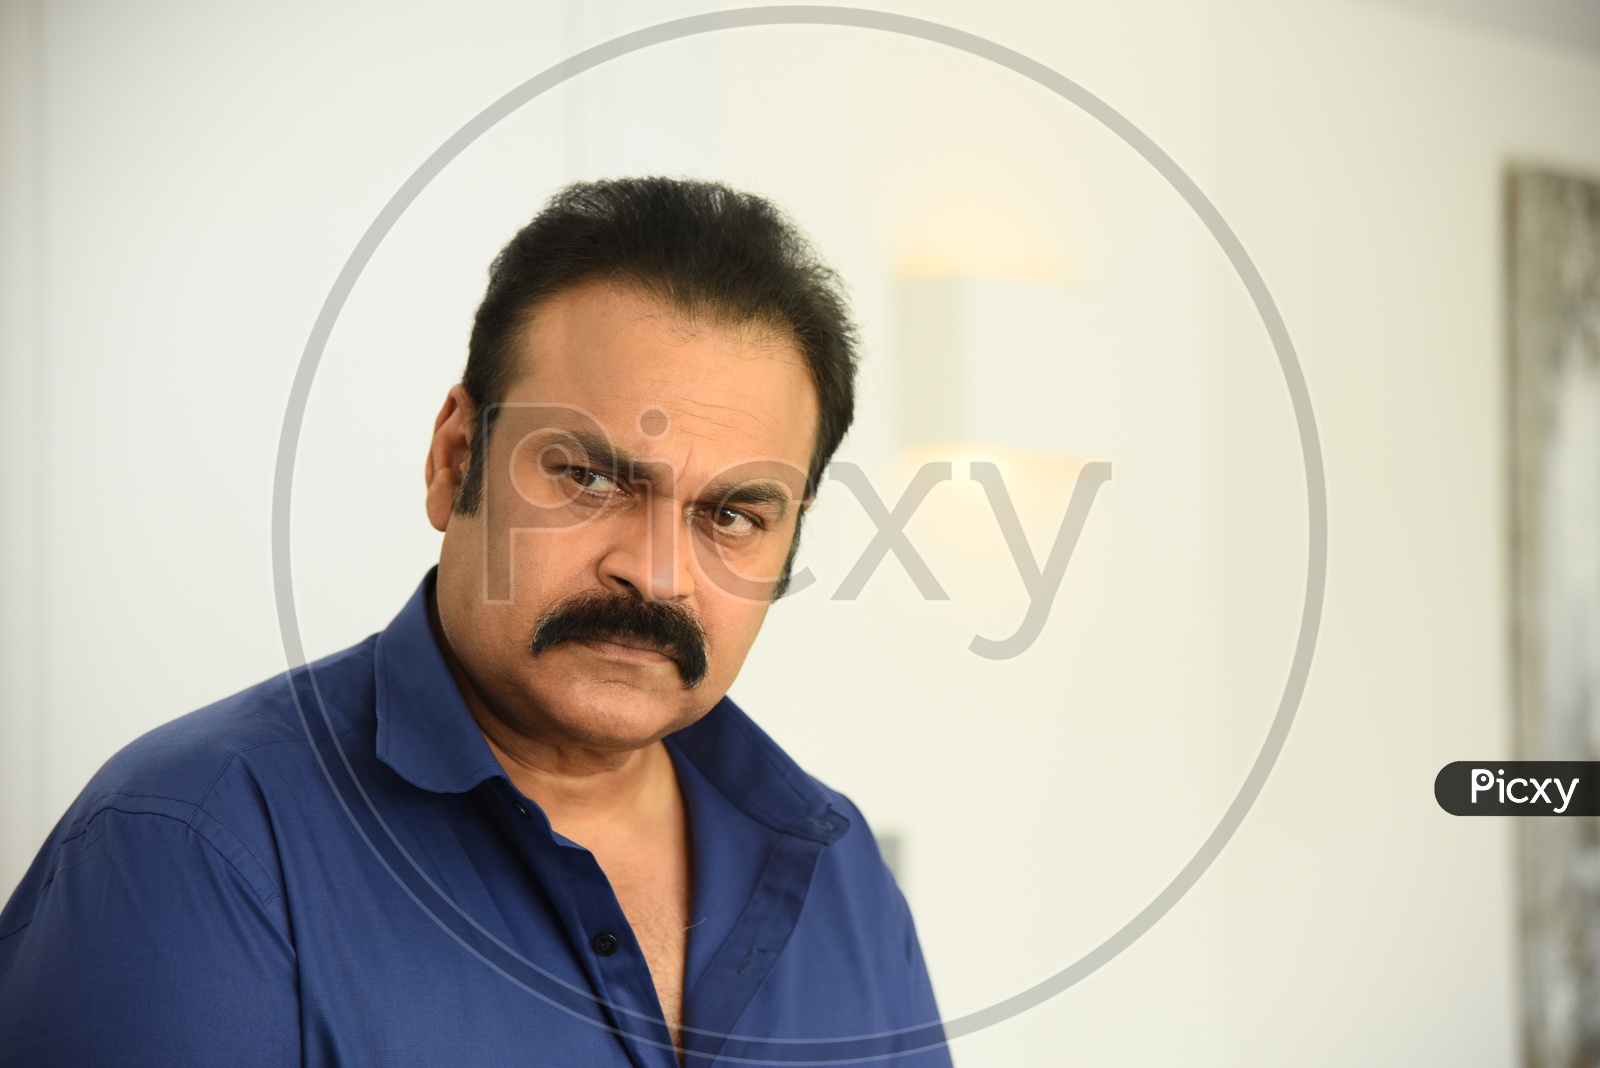 Telugu Film Actor Naga Babu